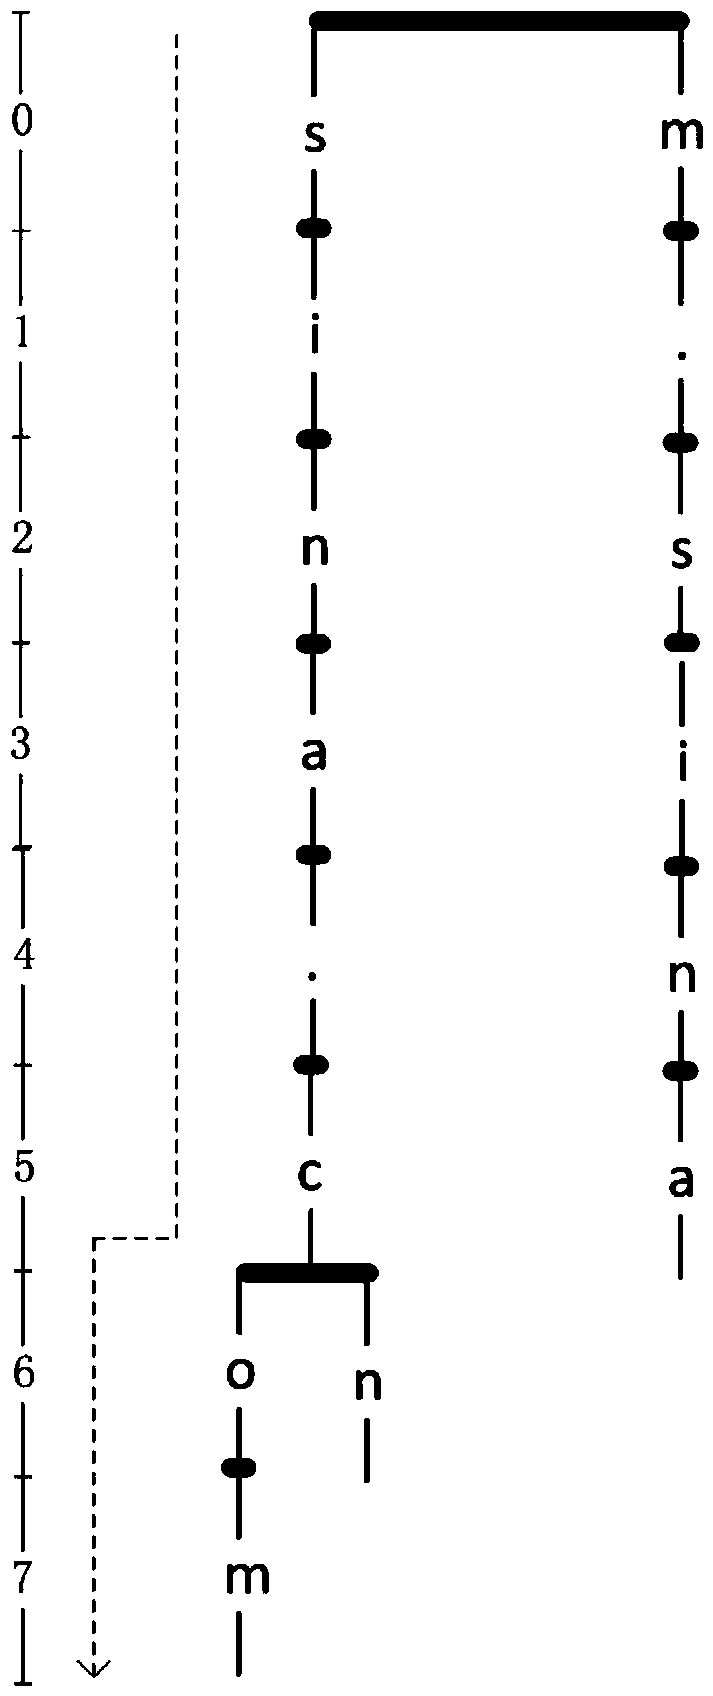 A Domain Name Matching Method Based on Tree Automata